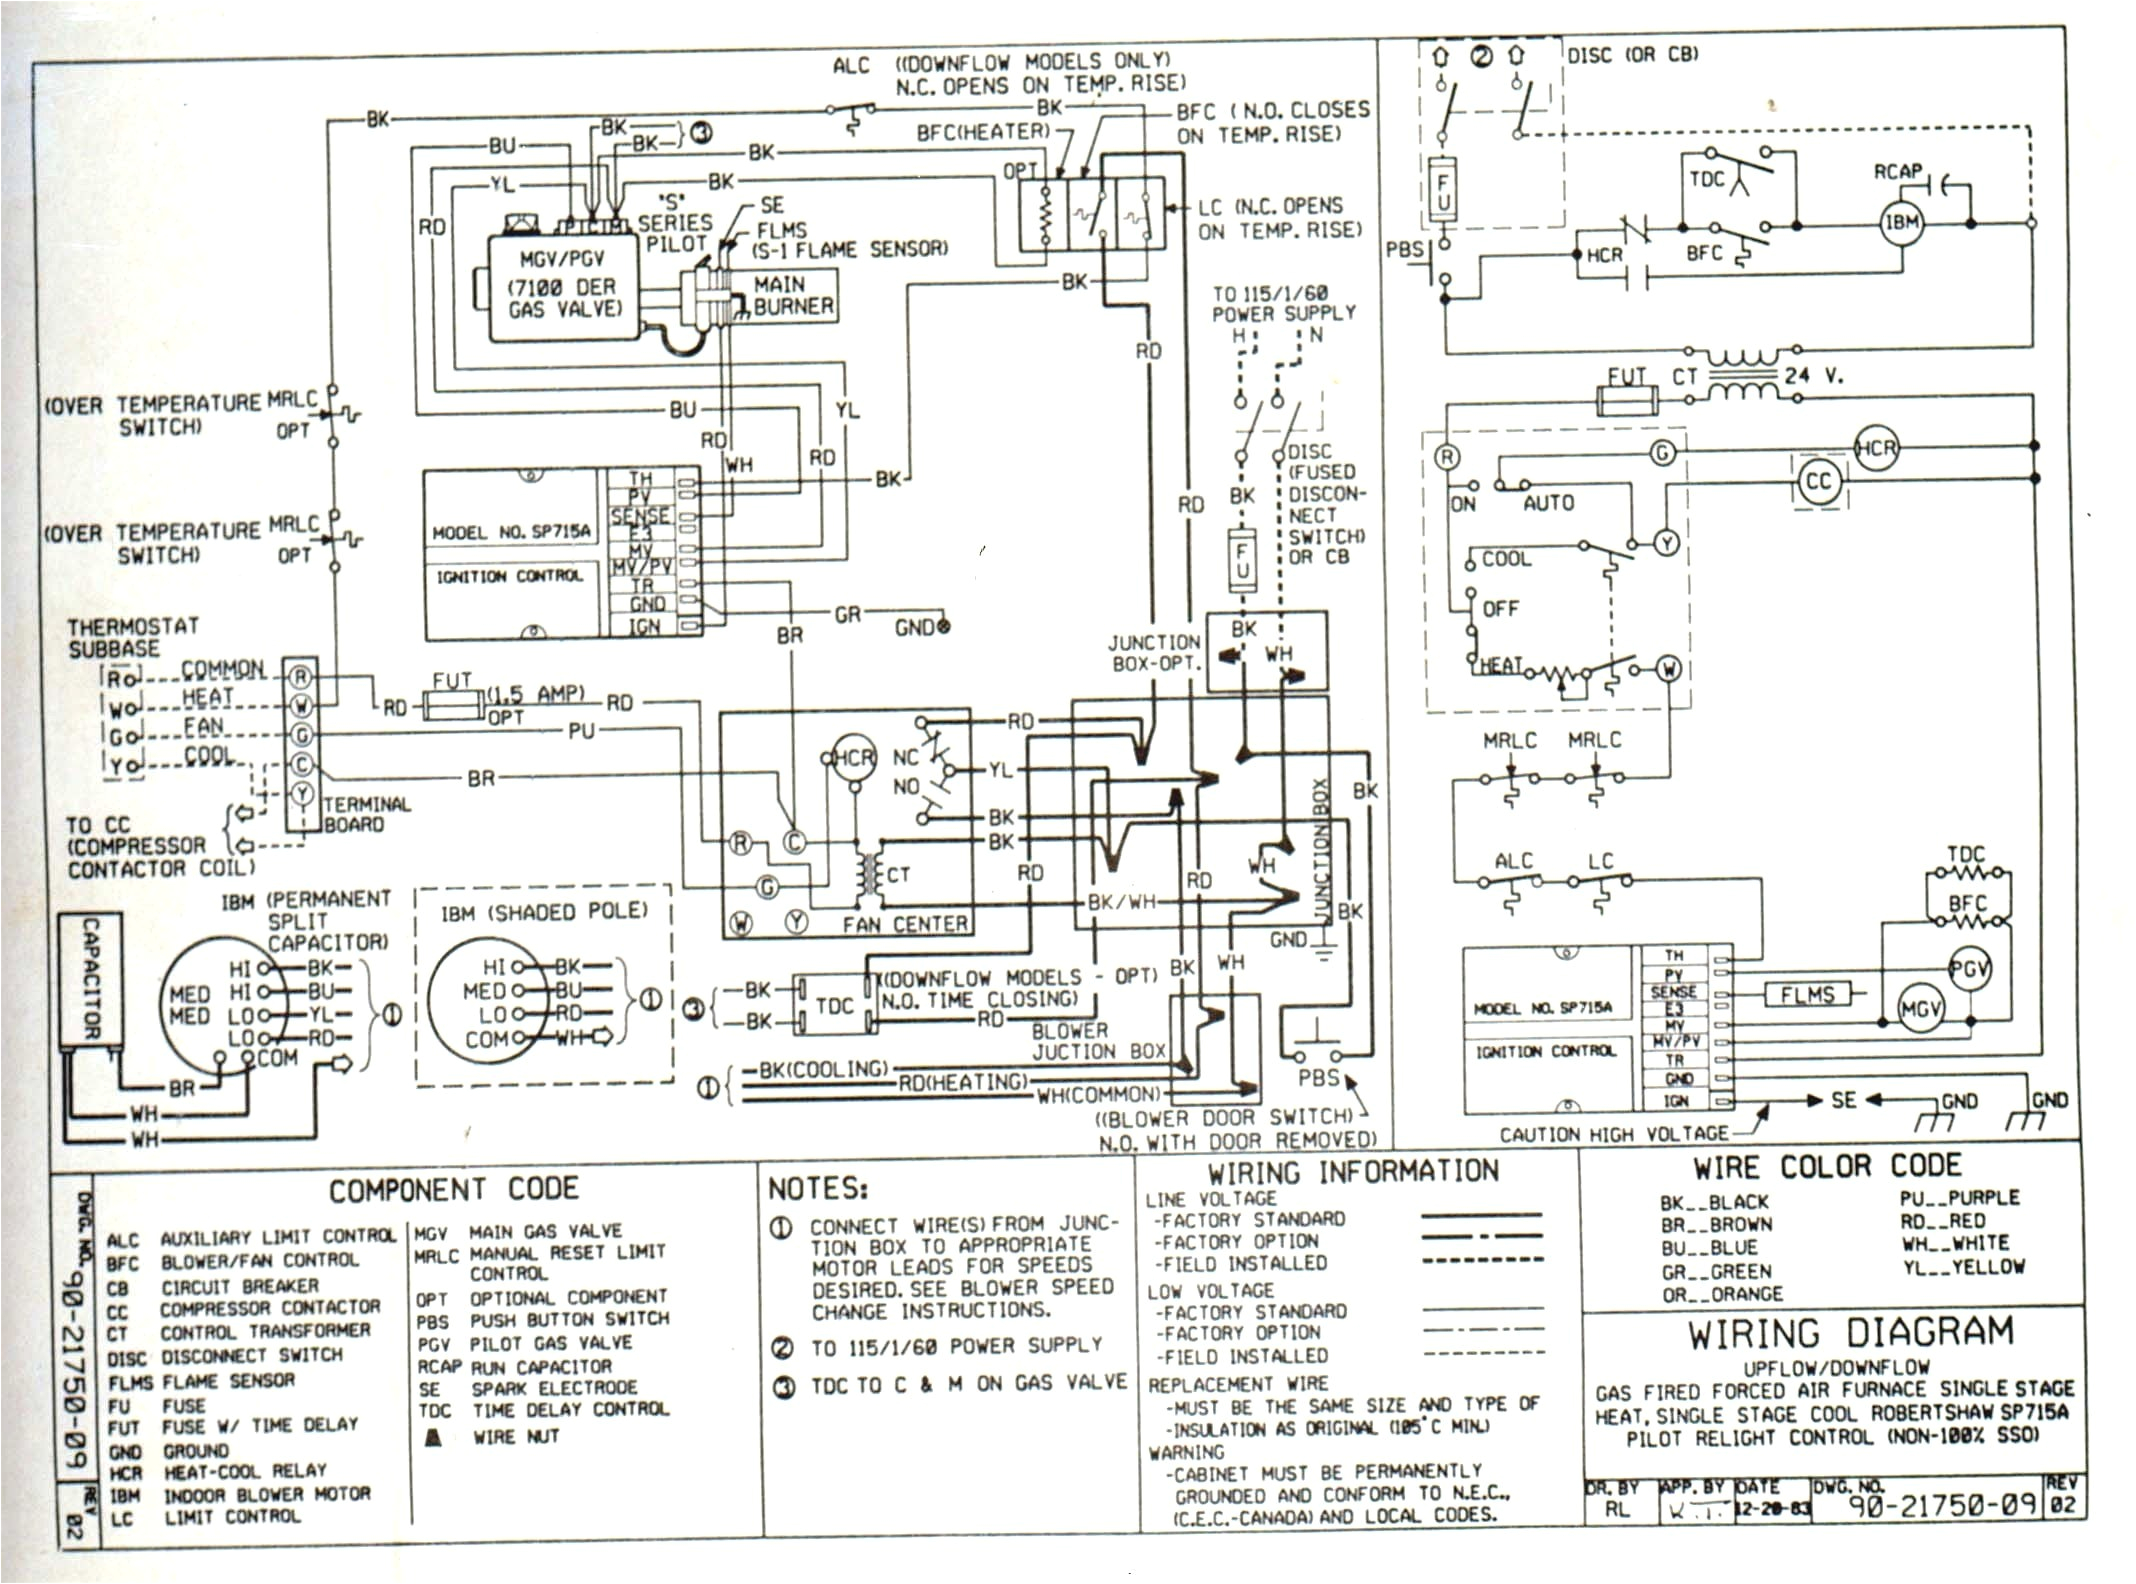 Motor Space Heater Wiring Diagram Cougar Wiring Diagram Heat Wiring Diagram Sheet